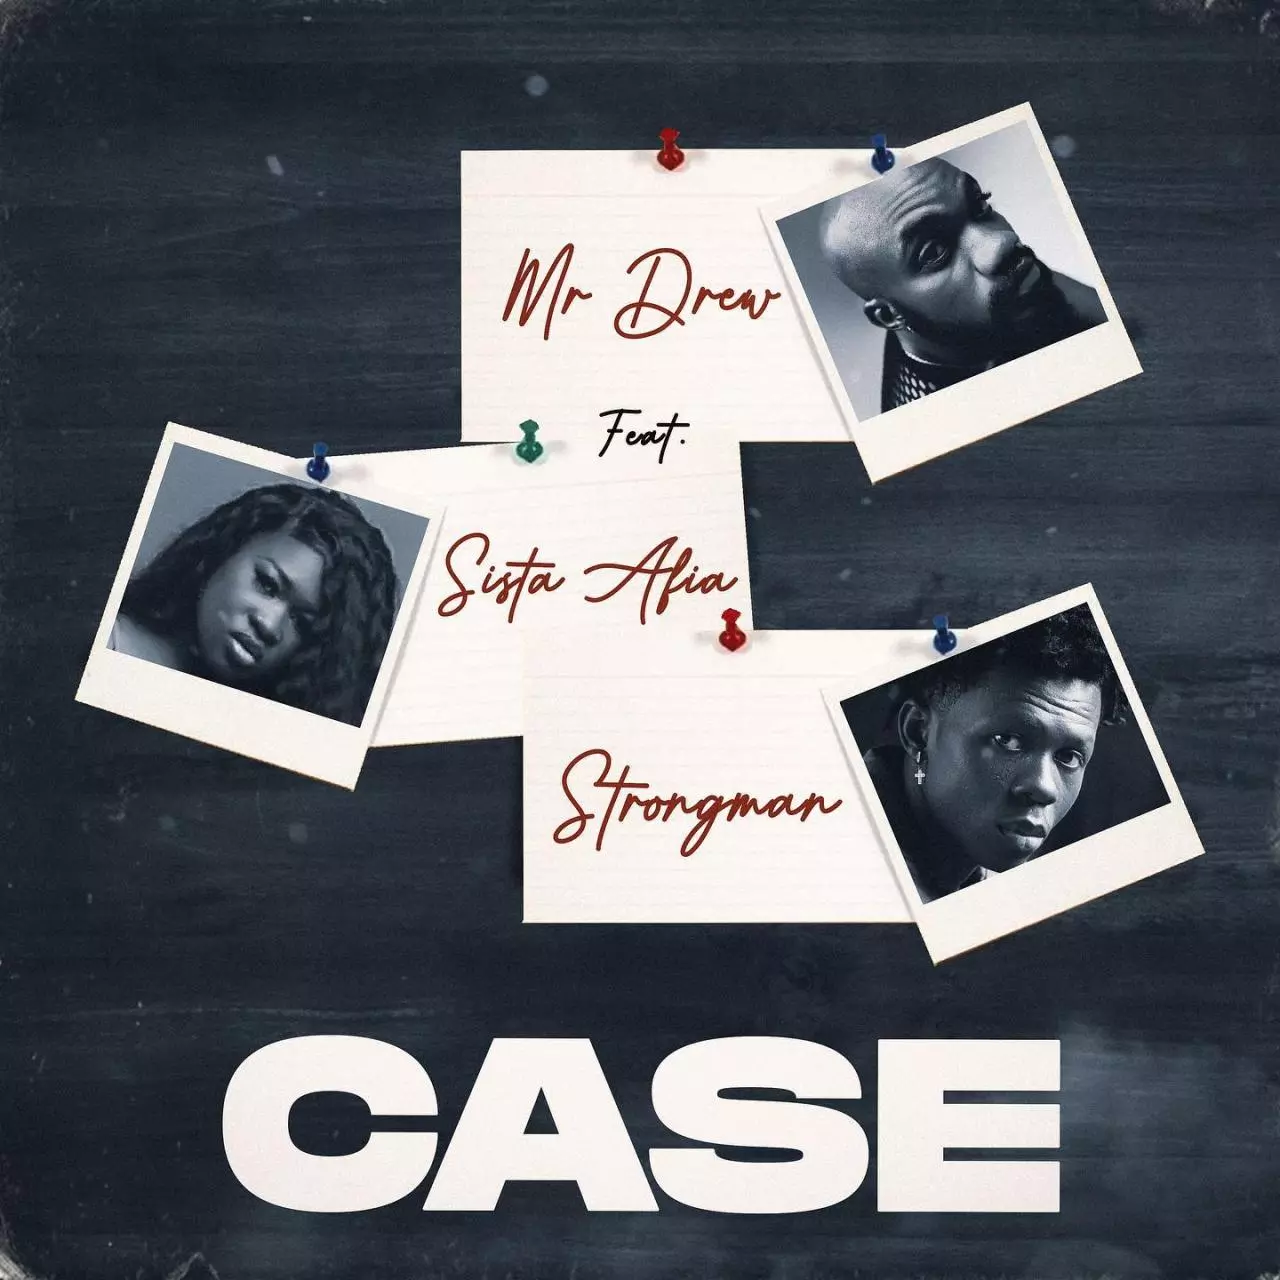 Download MP3: Case by Mr Drew Ft Sista Afia & Strongman | Halmblog.com